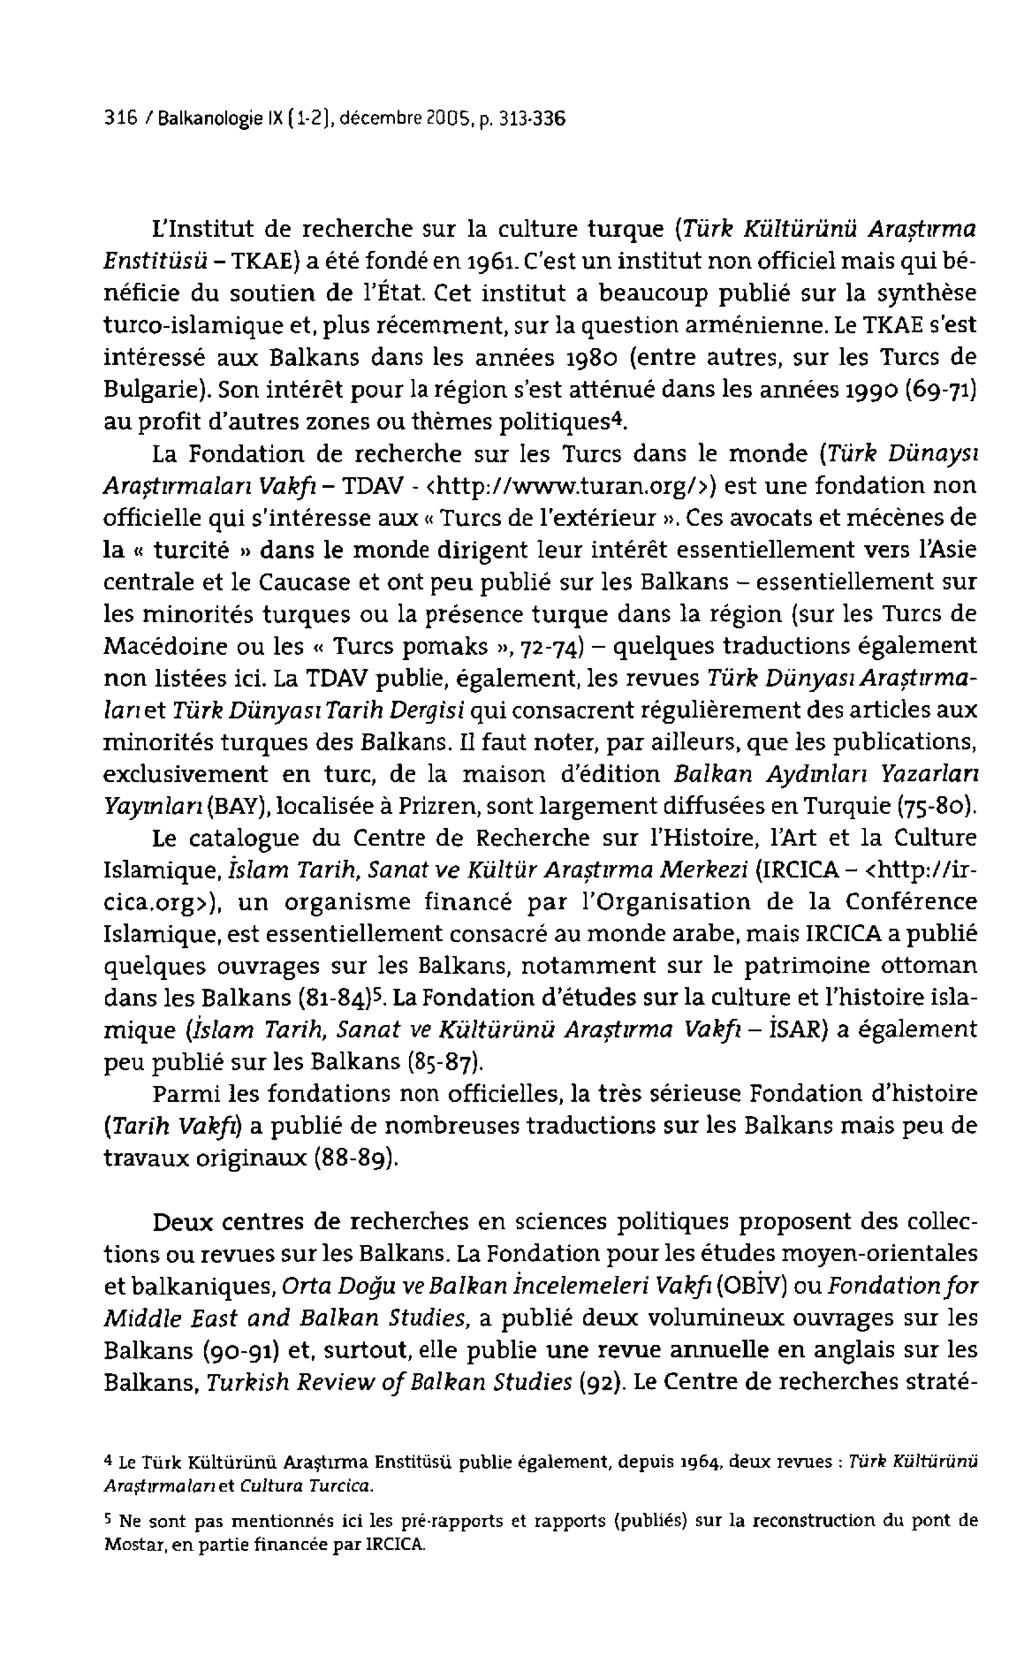 316 / Balkanologie IX (1-2), décembre 2005, p. 313-336 L'Institut de recherche sur la culture turque (Türk Kültürünü Araştirma Enstitüsü - TKAE) a été fondé en 1961.